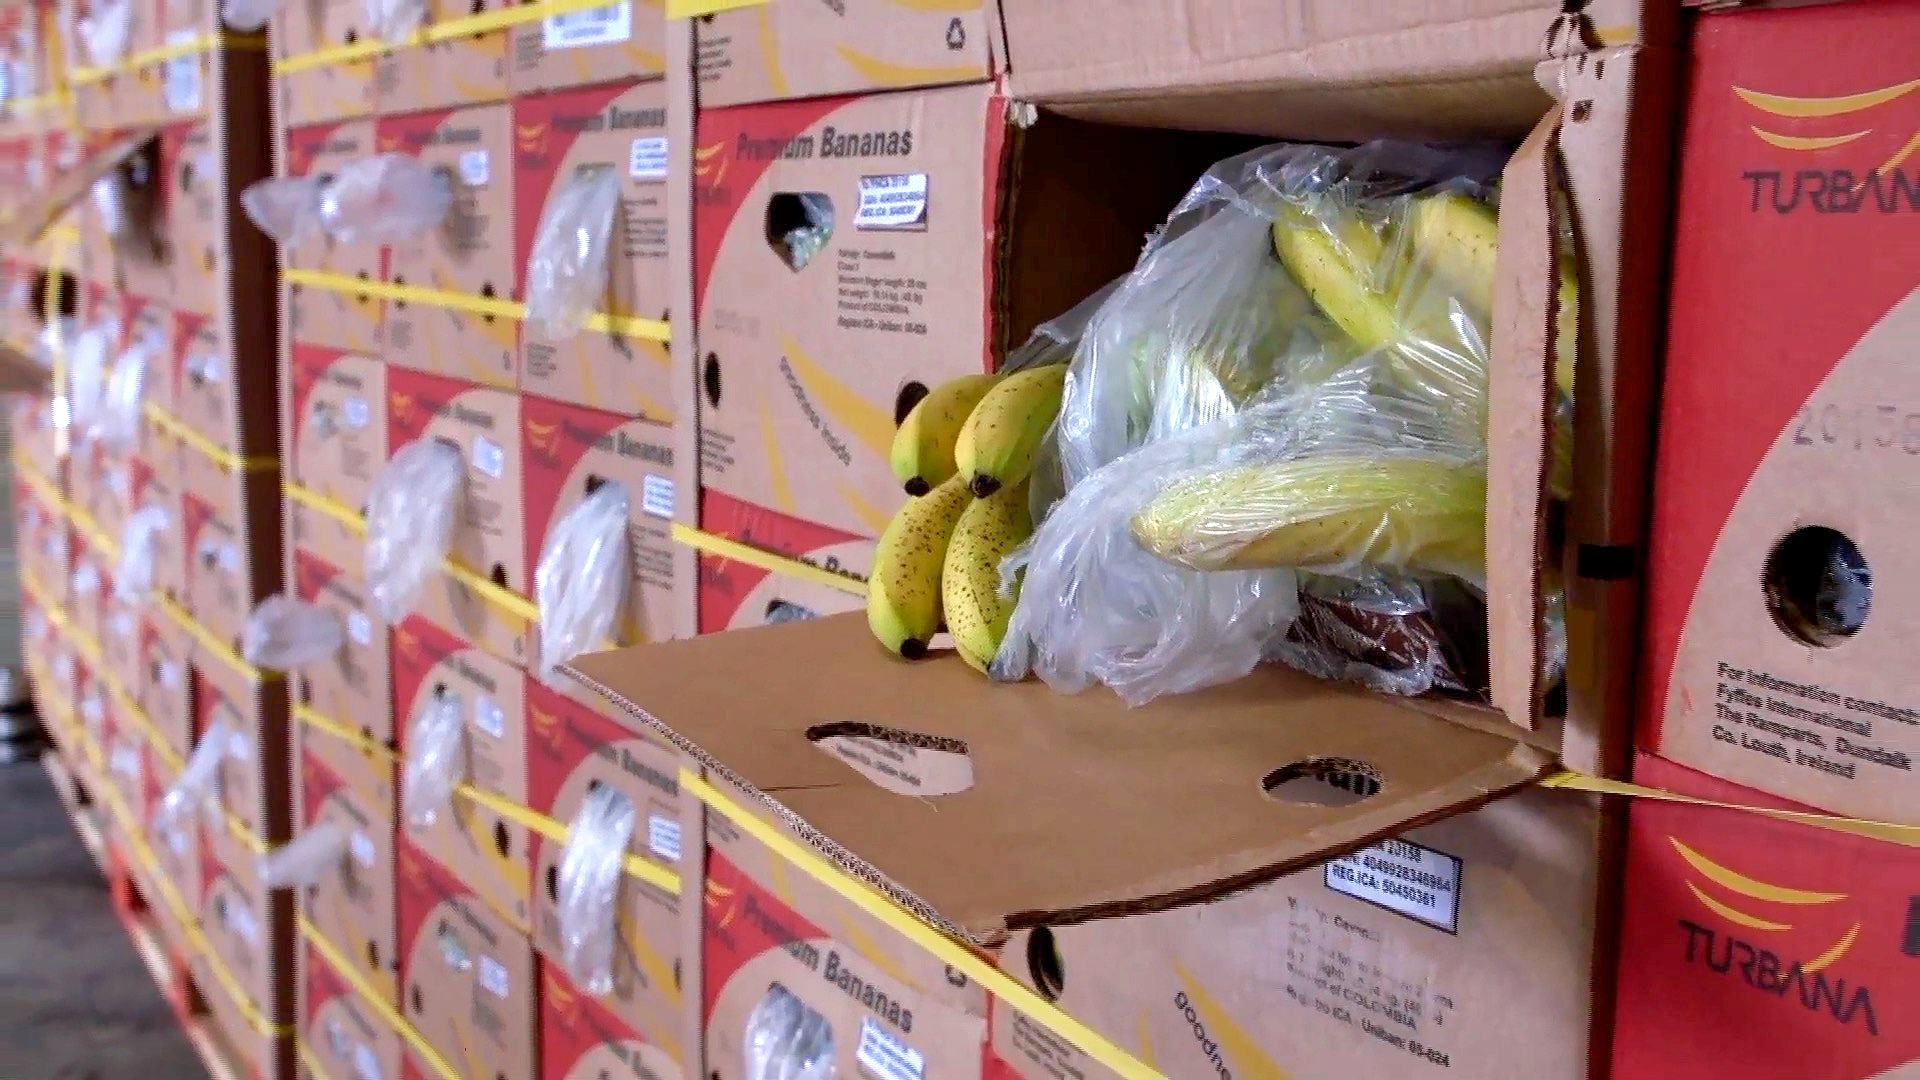 Afgedankte bananen in fabriek Geldermalsen gered van afvalbak